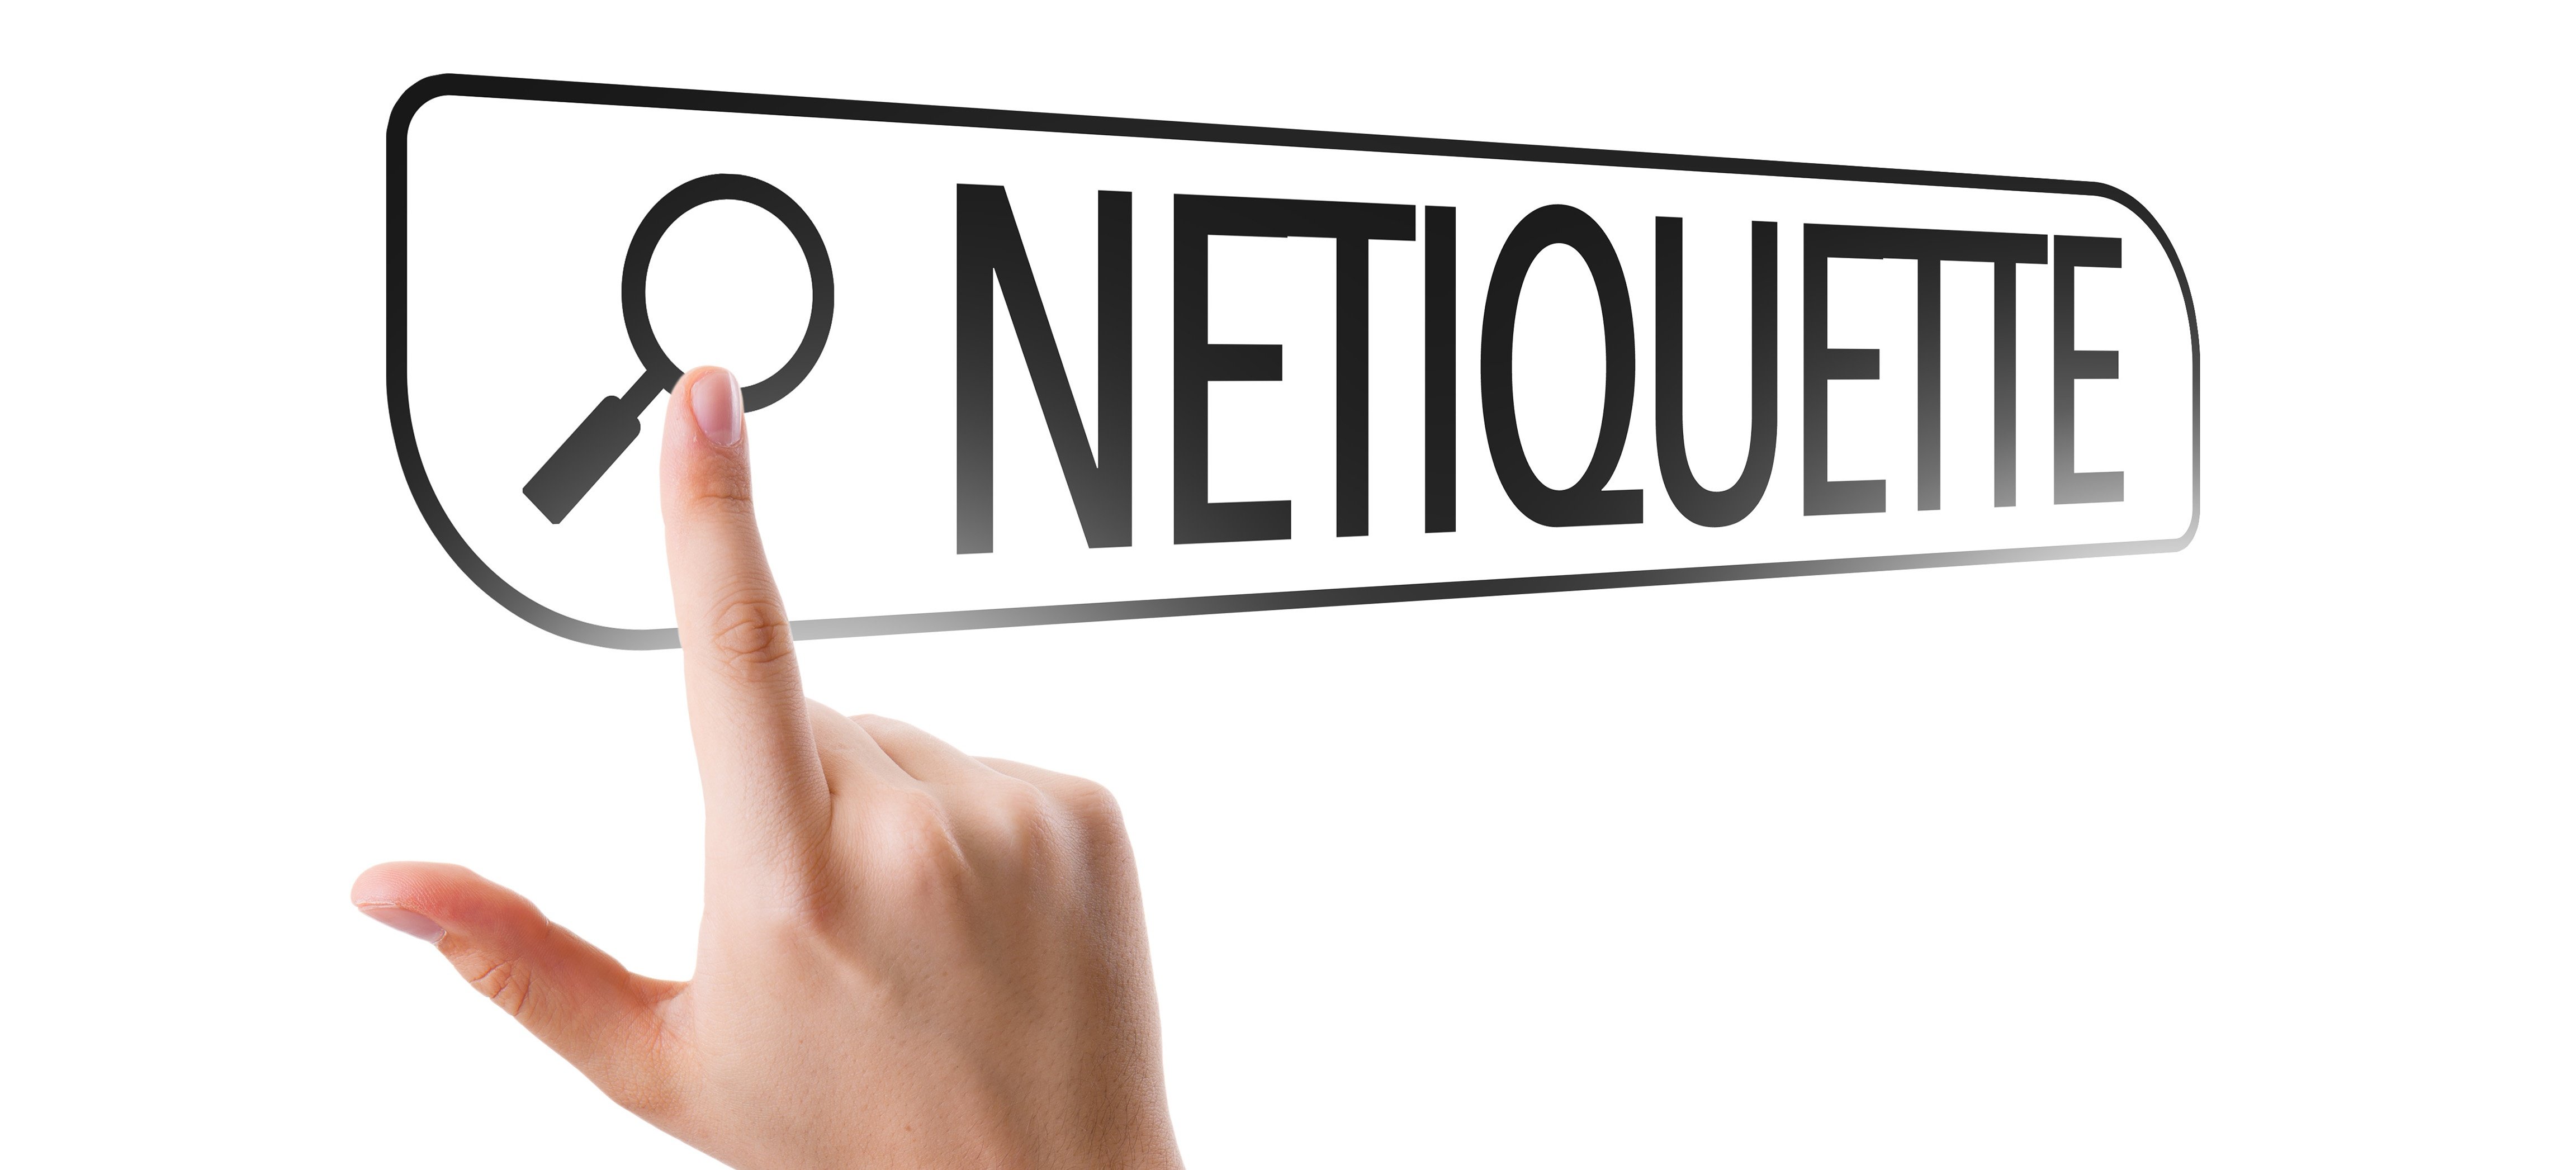 Netiquette Pix 3 Tips for improving Your Netiquette